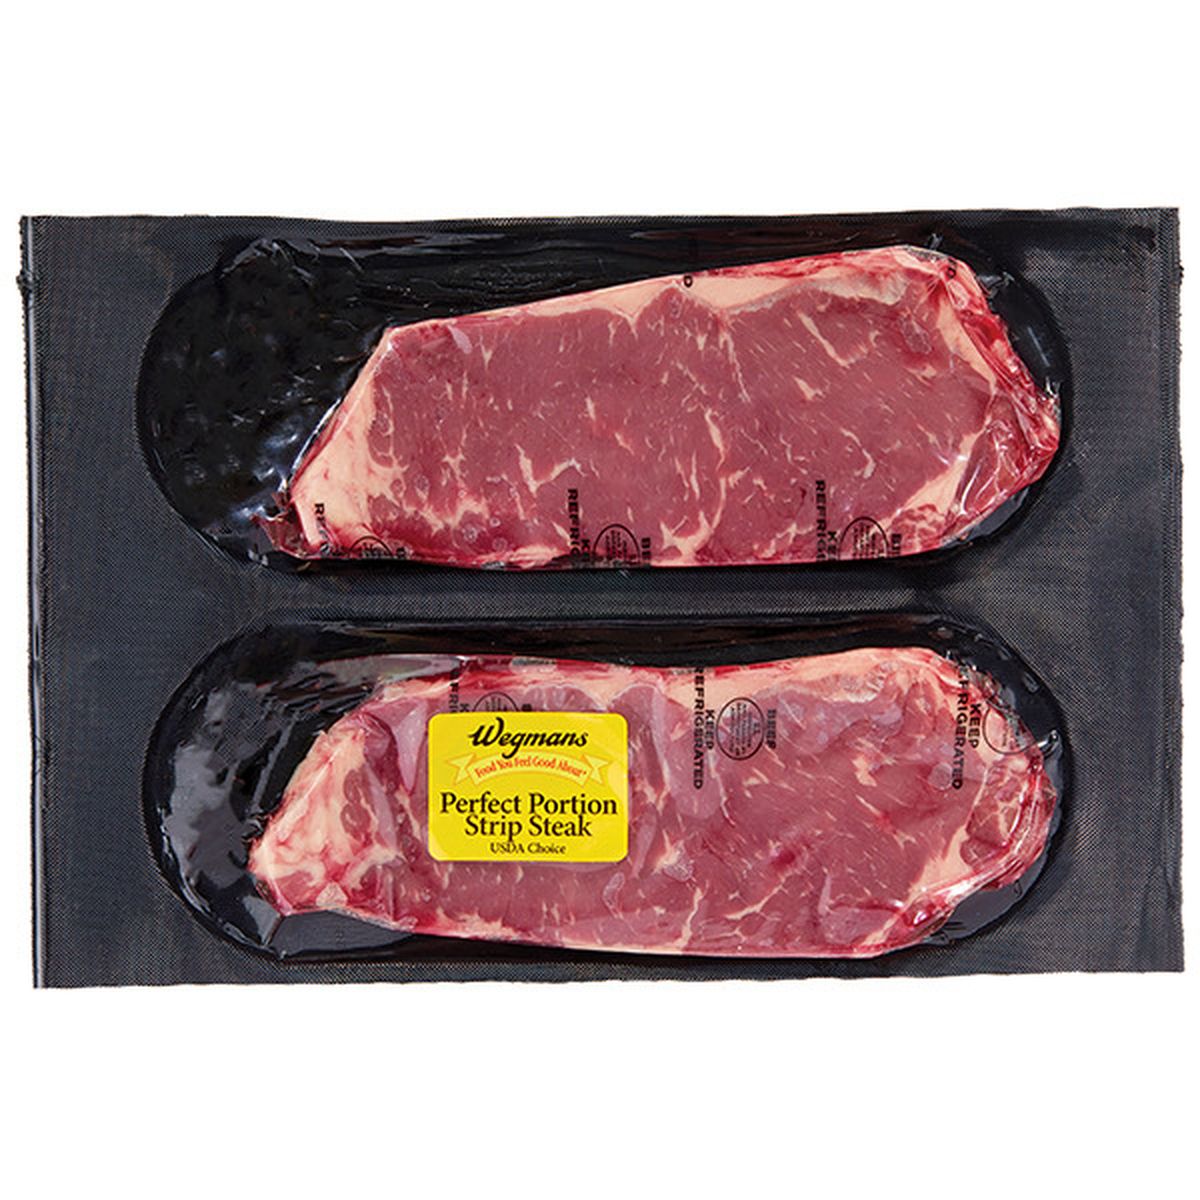 Calories in Wegmans Choice Perfect Portion Strip Steak